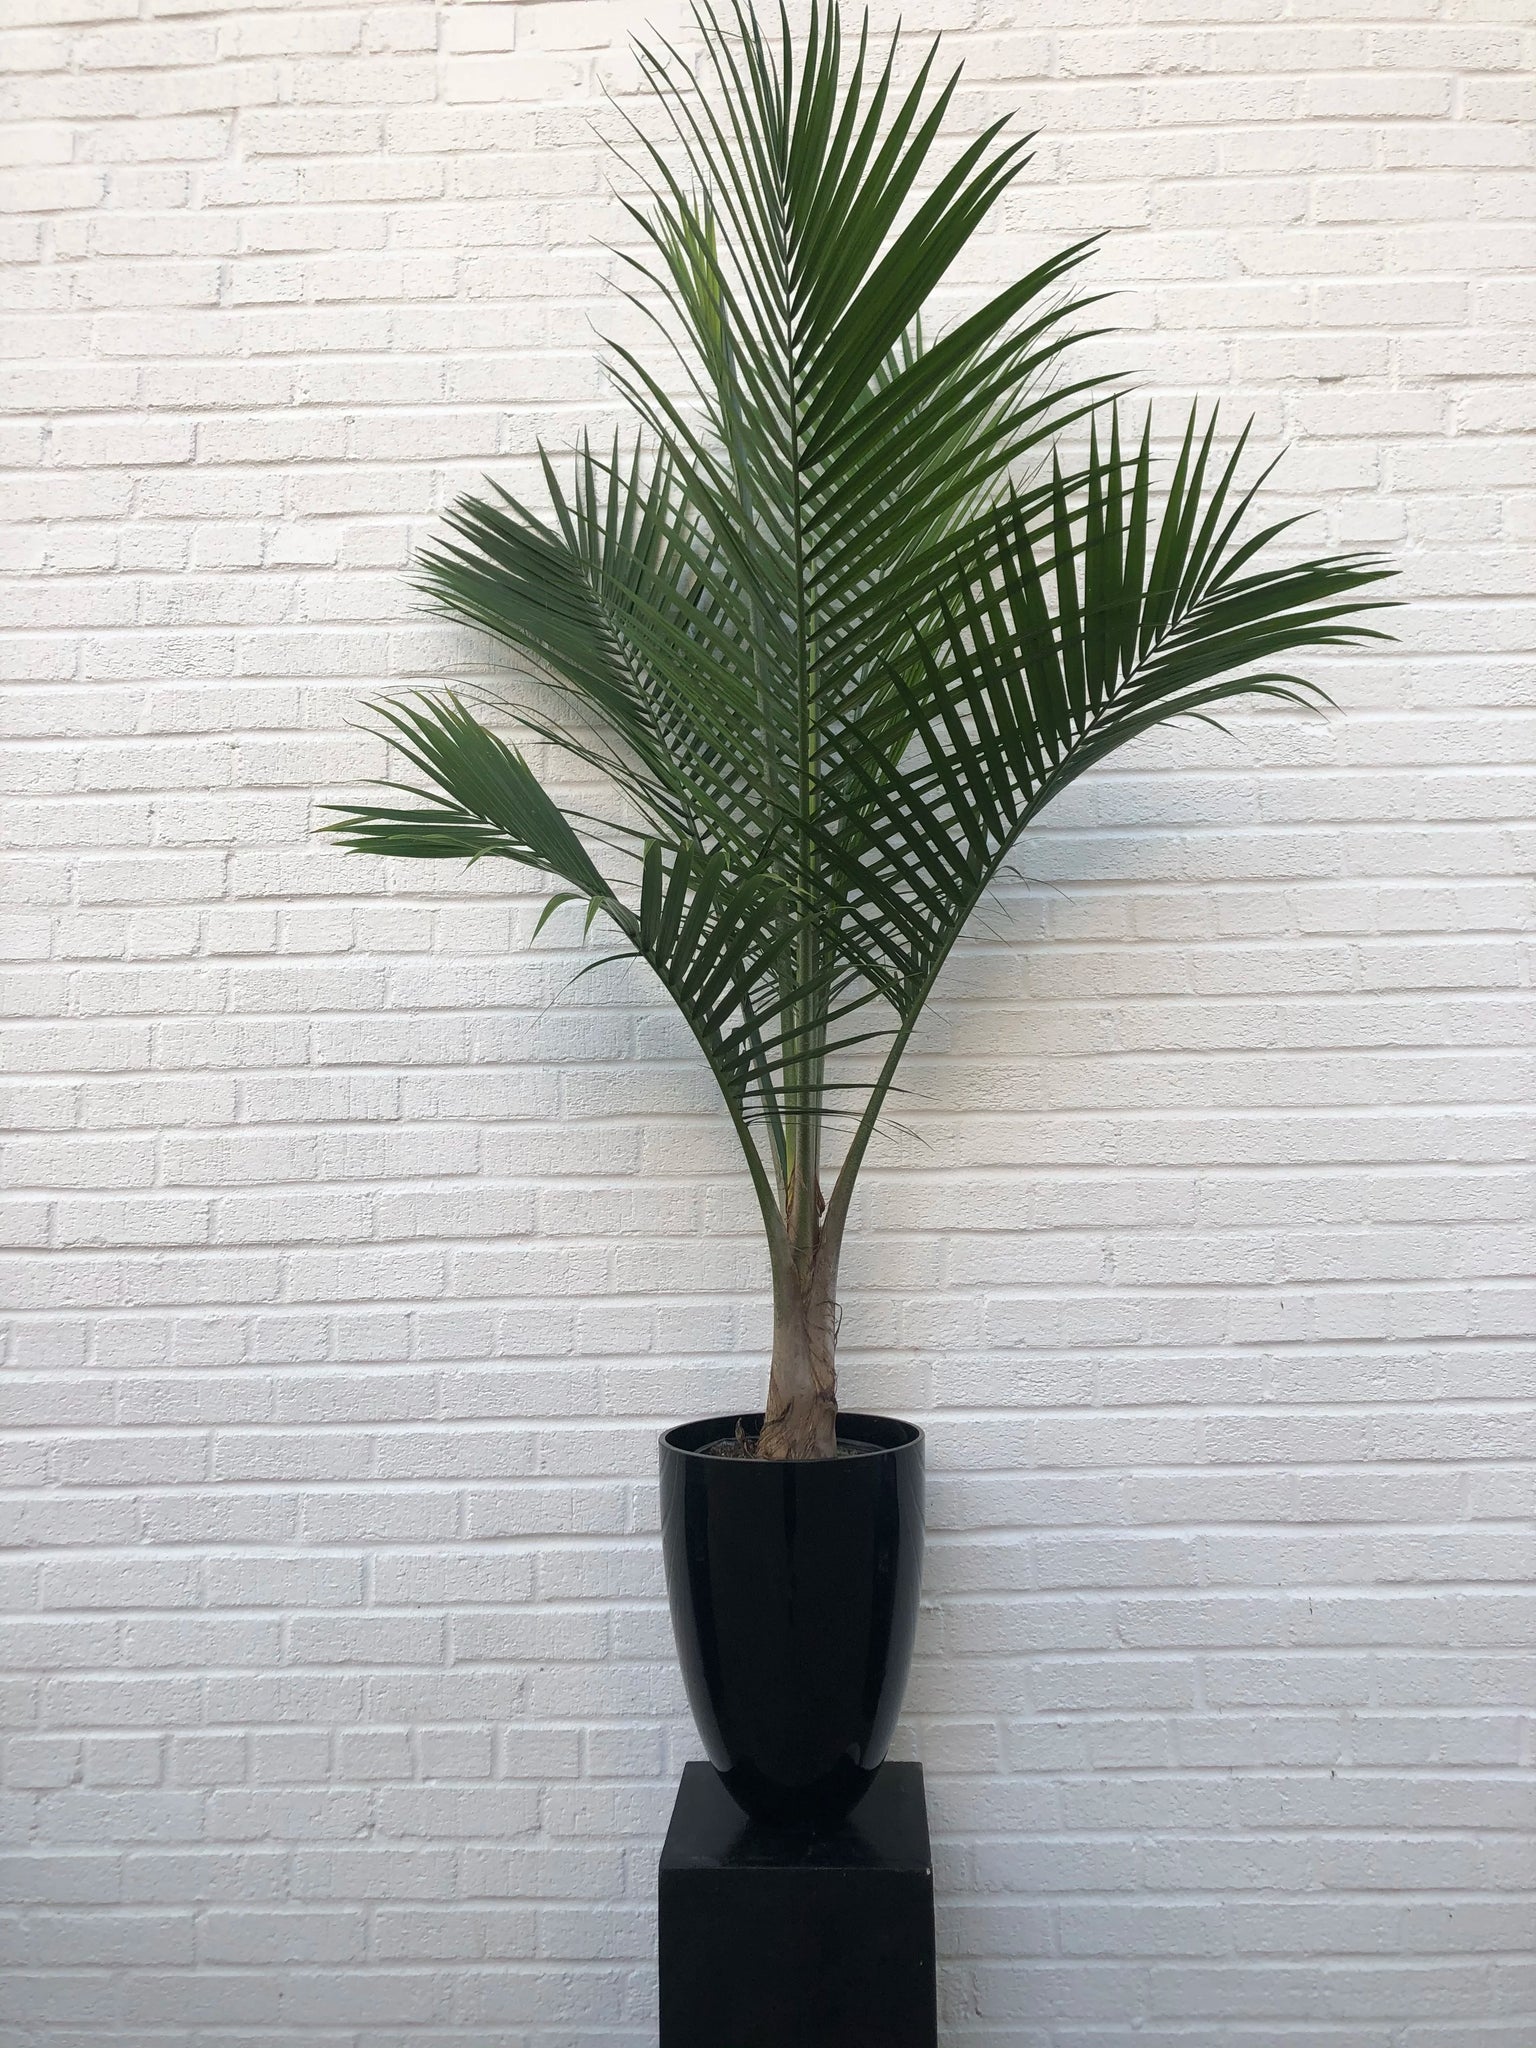 Ravenea rivularis "Majesty Palm"